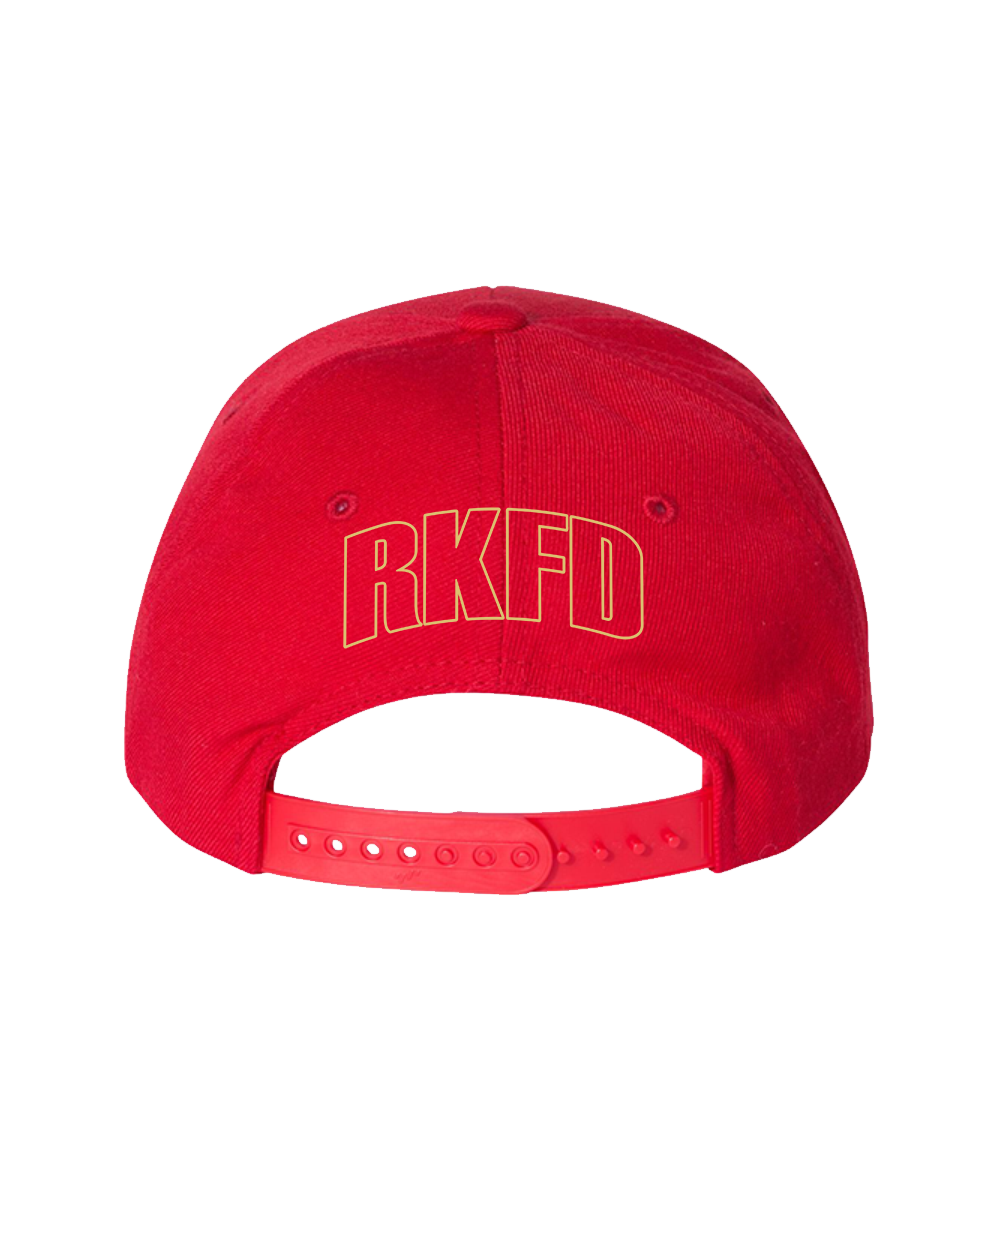 RKFD Champs Flatbill Snapback (Red)